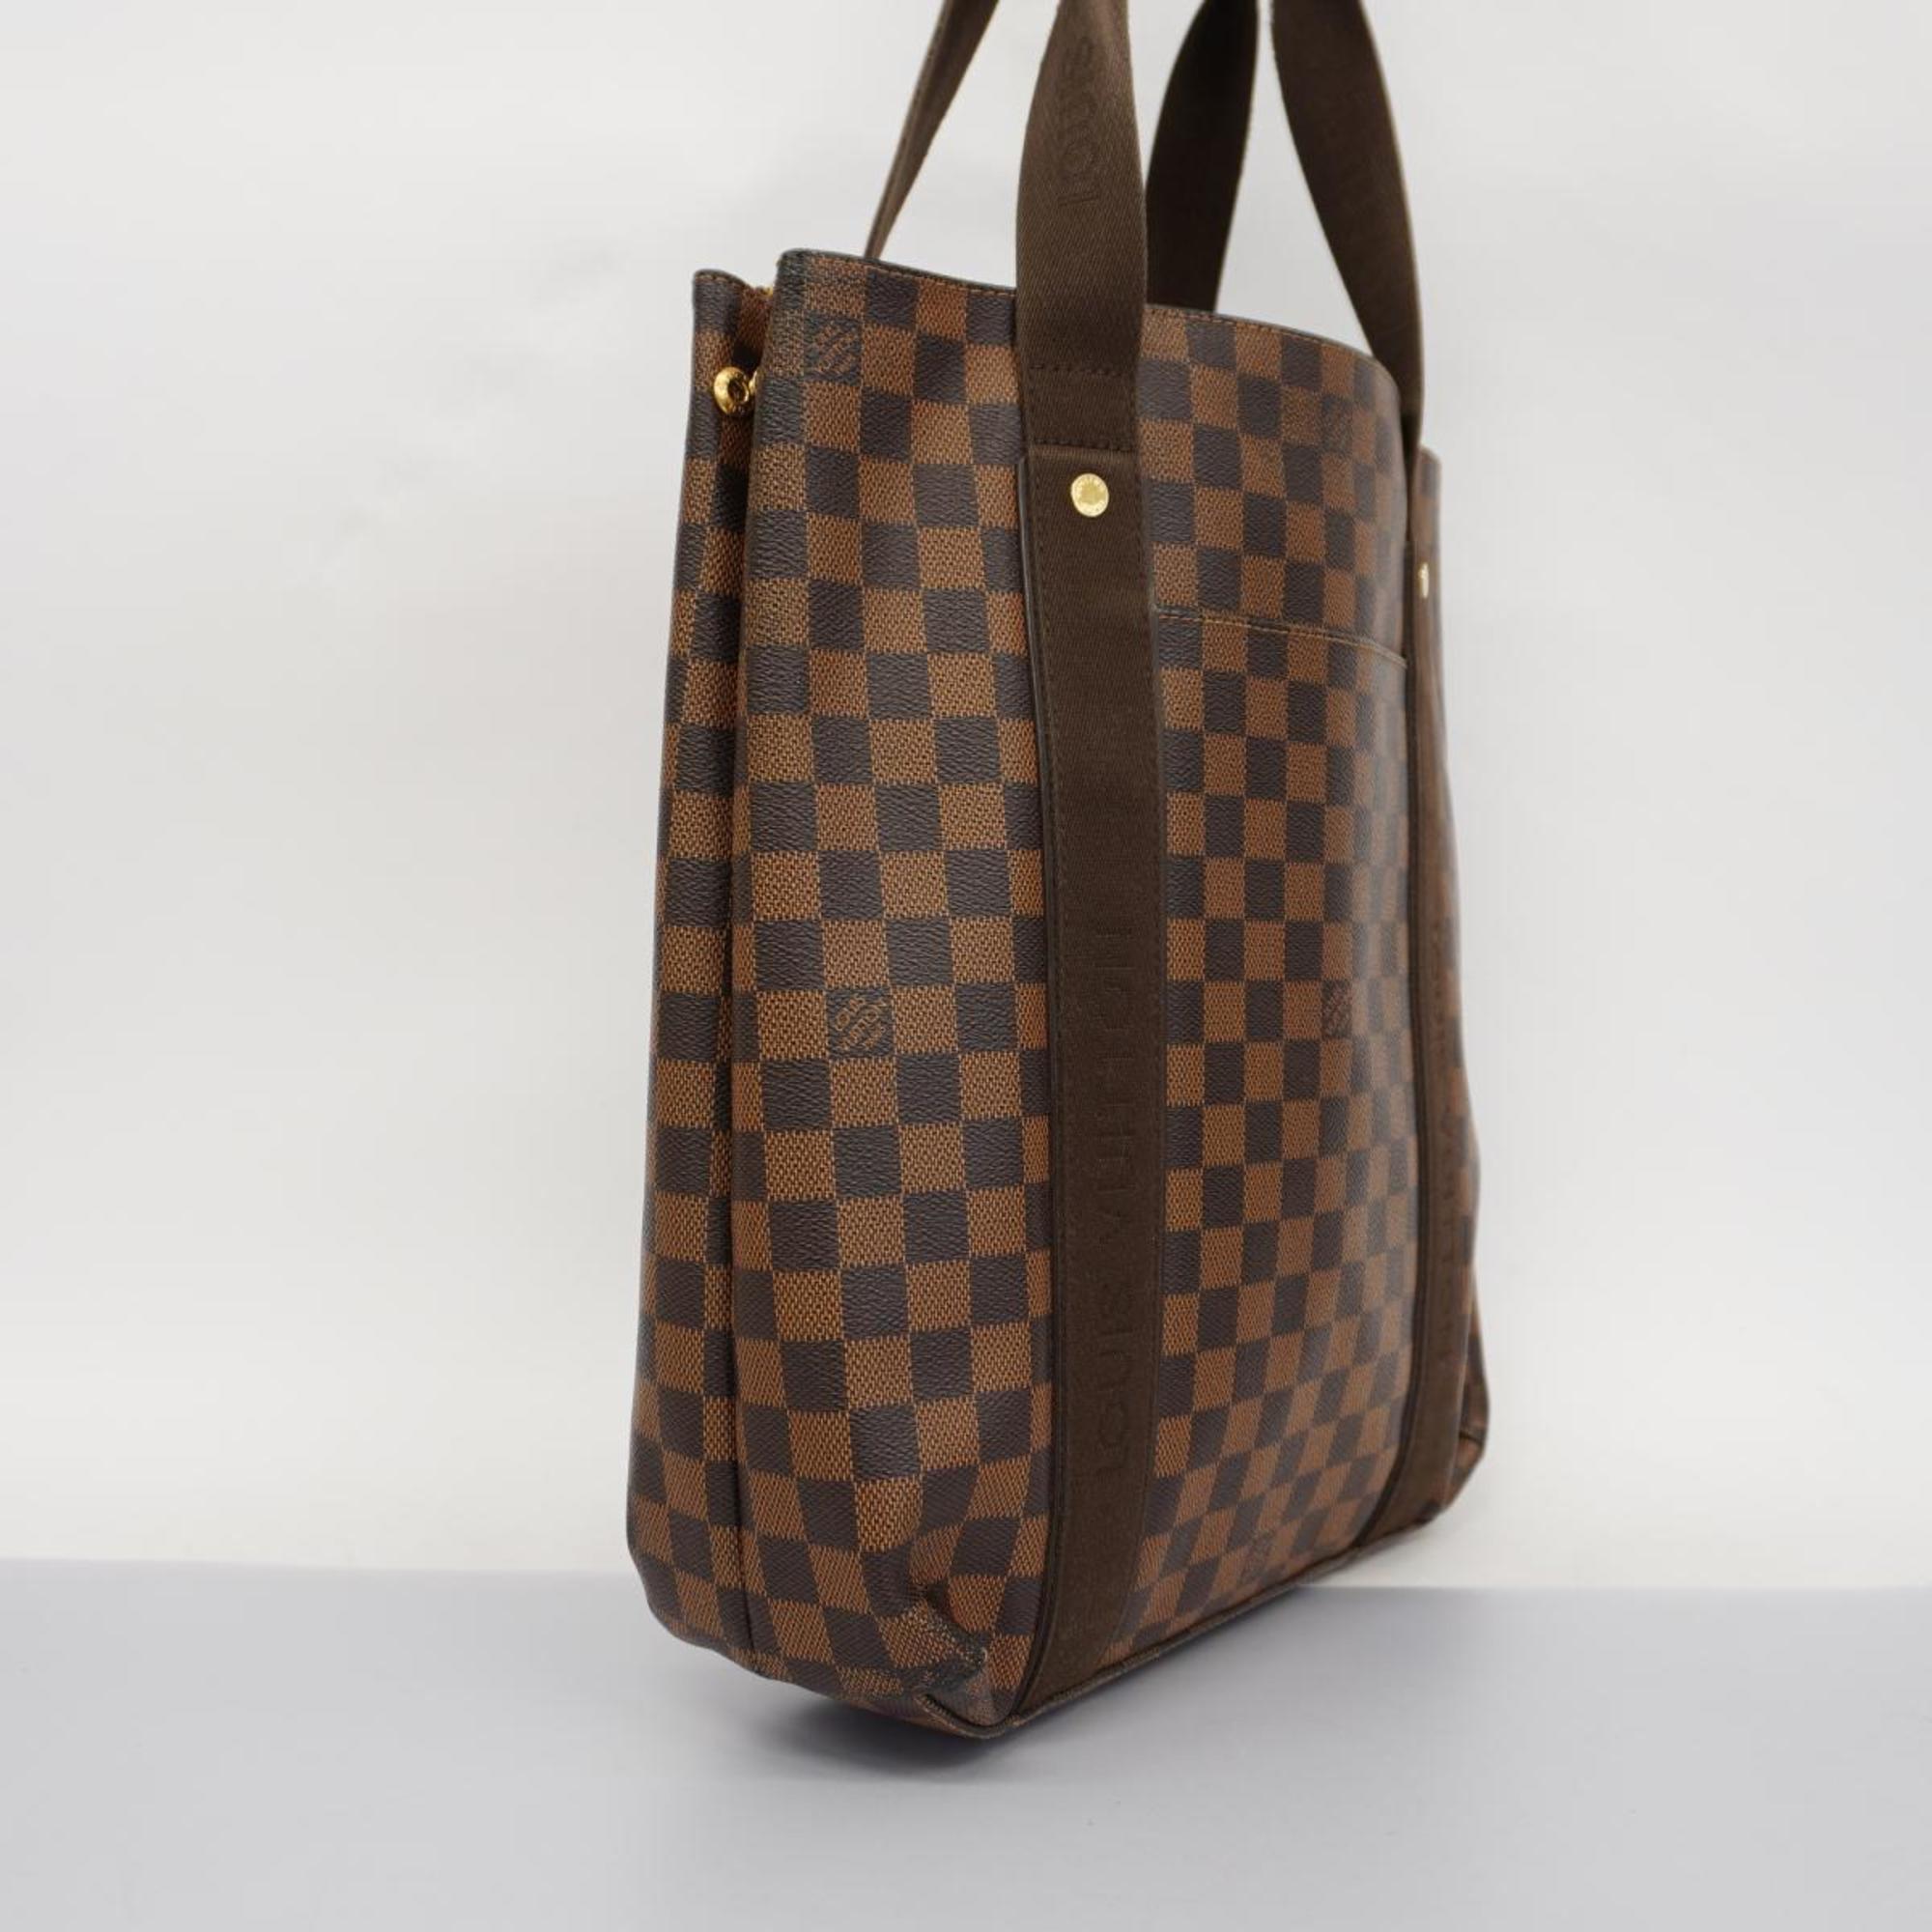 Louis Vuitton Tote Bag Damier Kababour N52006 Ebene Women's